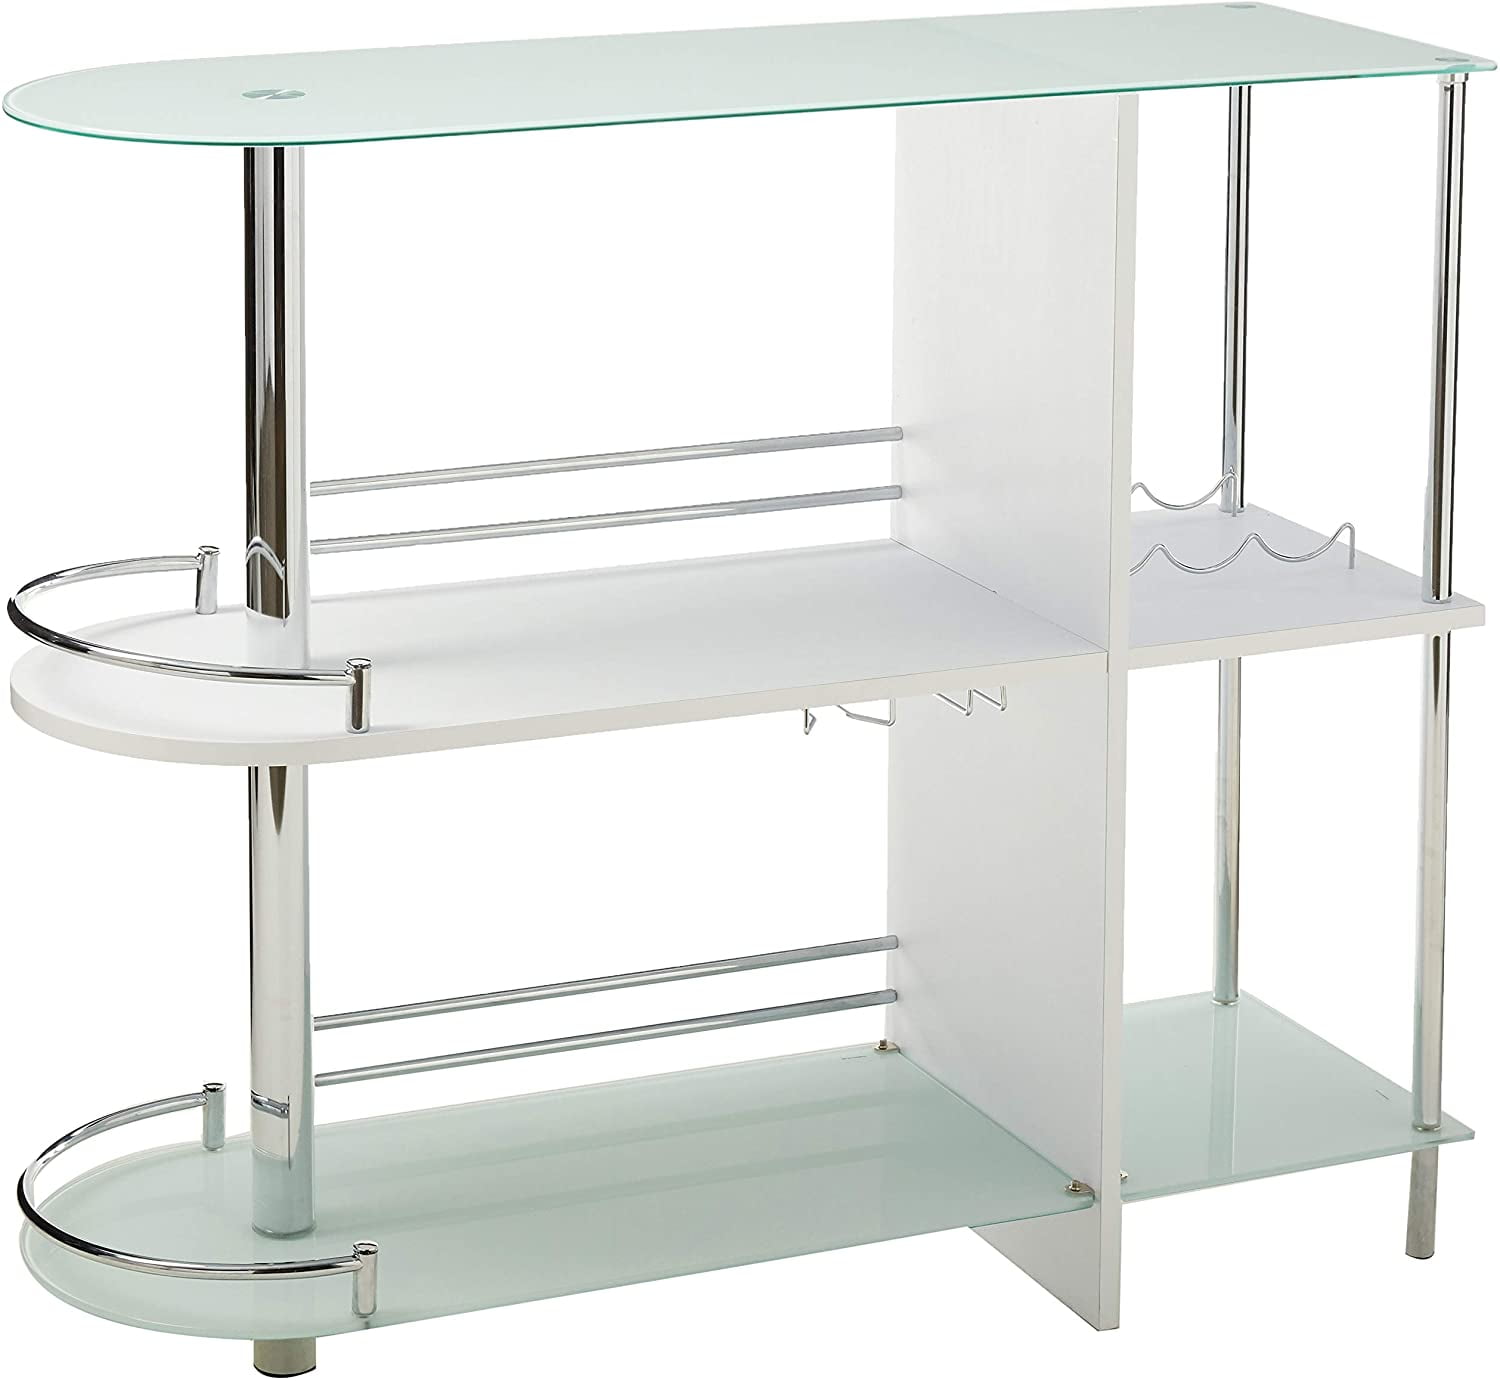 Pilaster Designs Black Chrome Finish Bar Table with Storage Shelves 